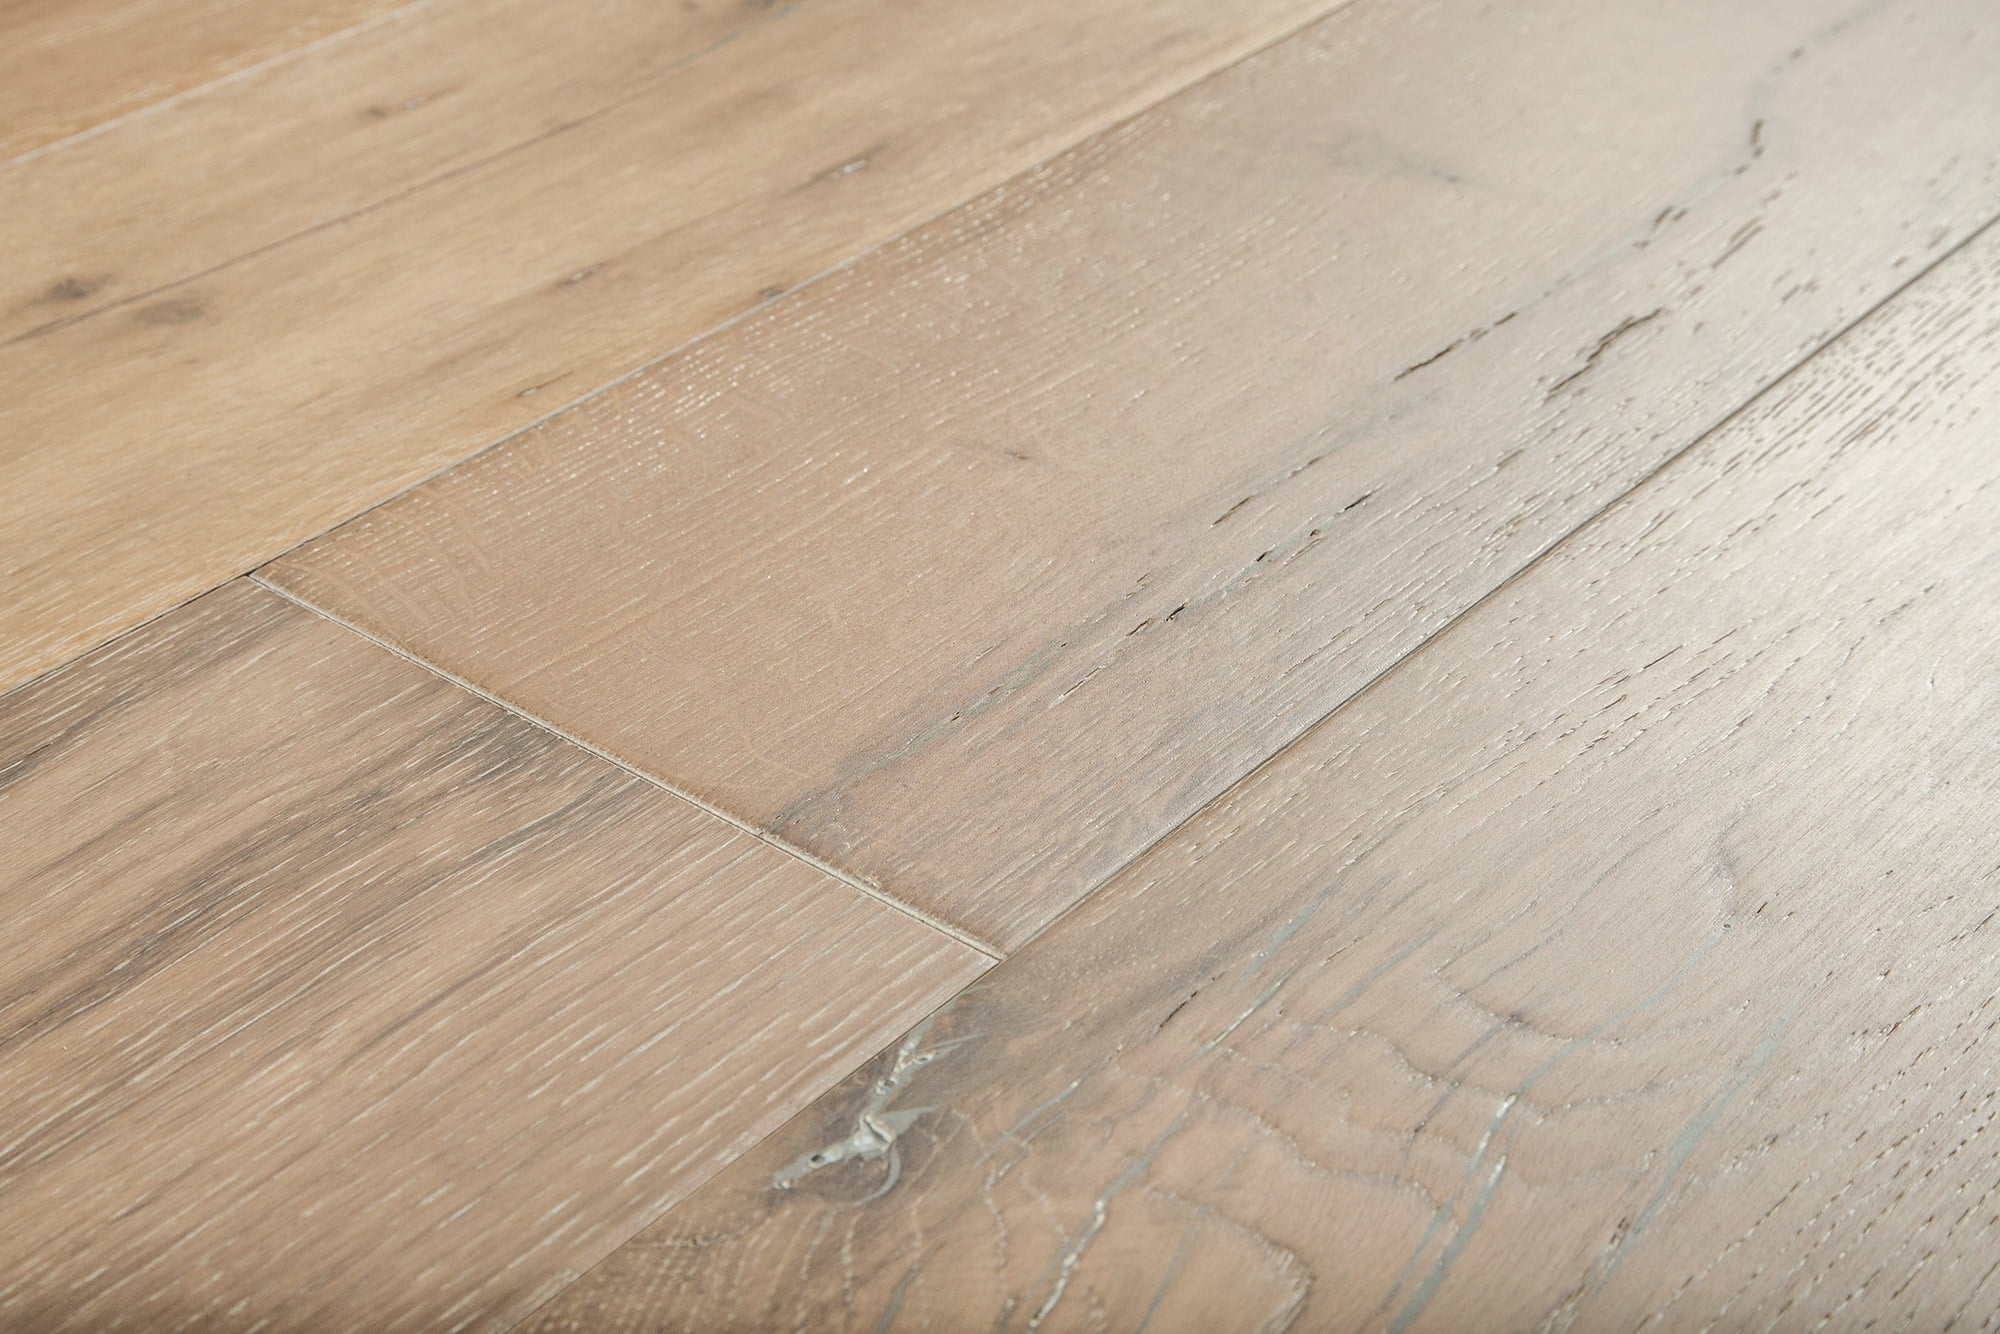 Builddirect Sedona Silver Oak 0 56mm 72, Box Of Hardwood Flooring